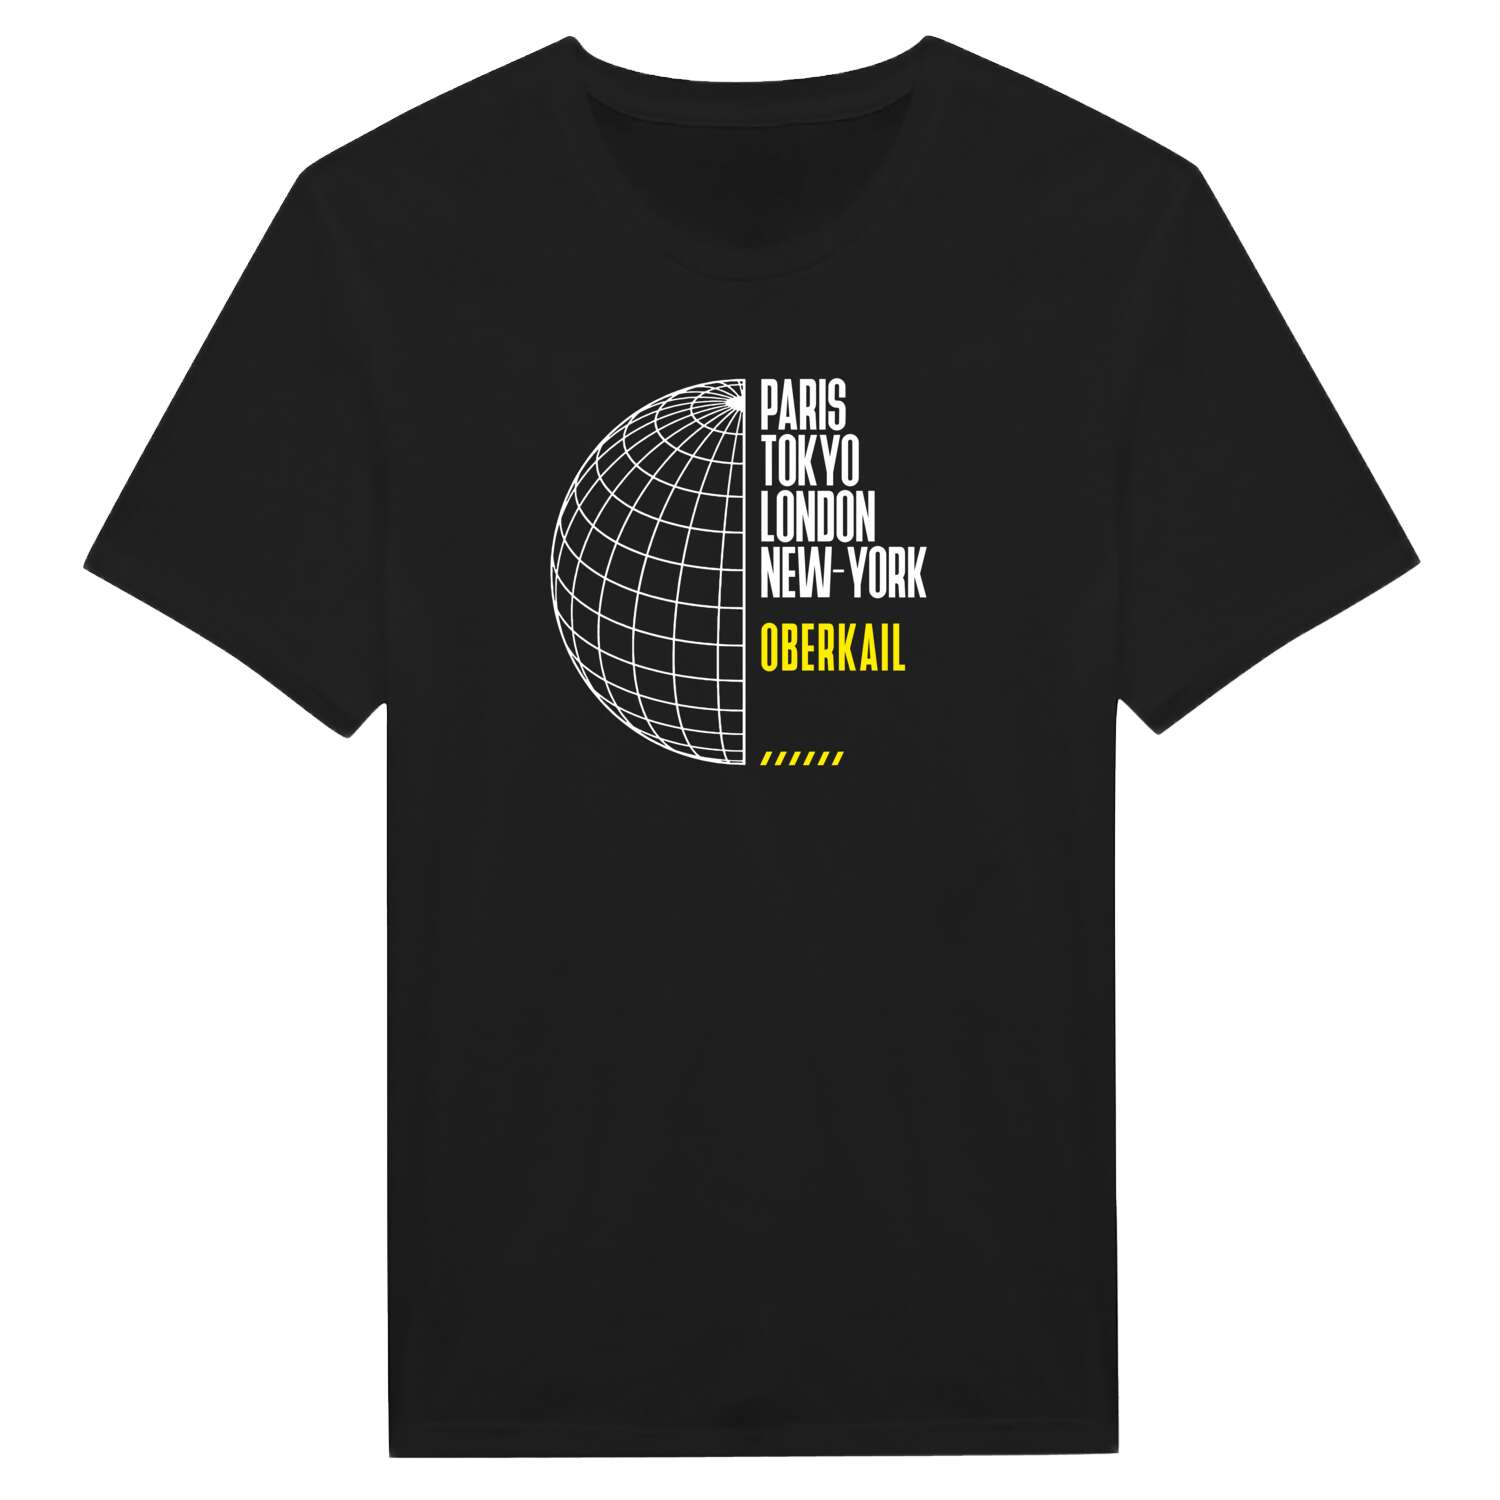 Oberkail T-Shirt »Paris Tokyo London«